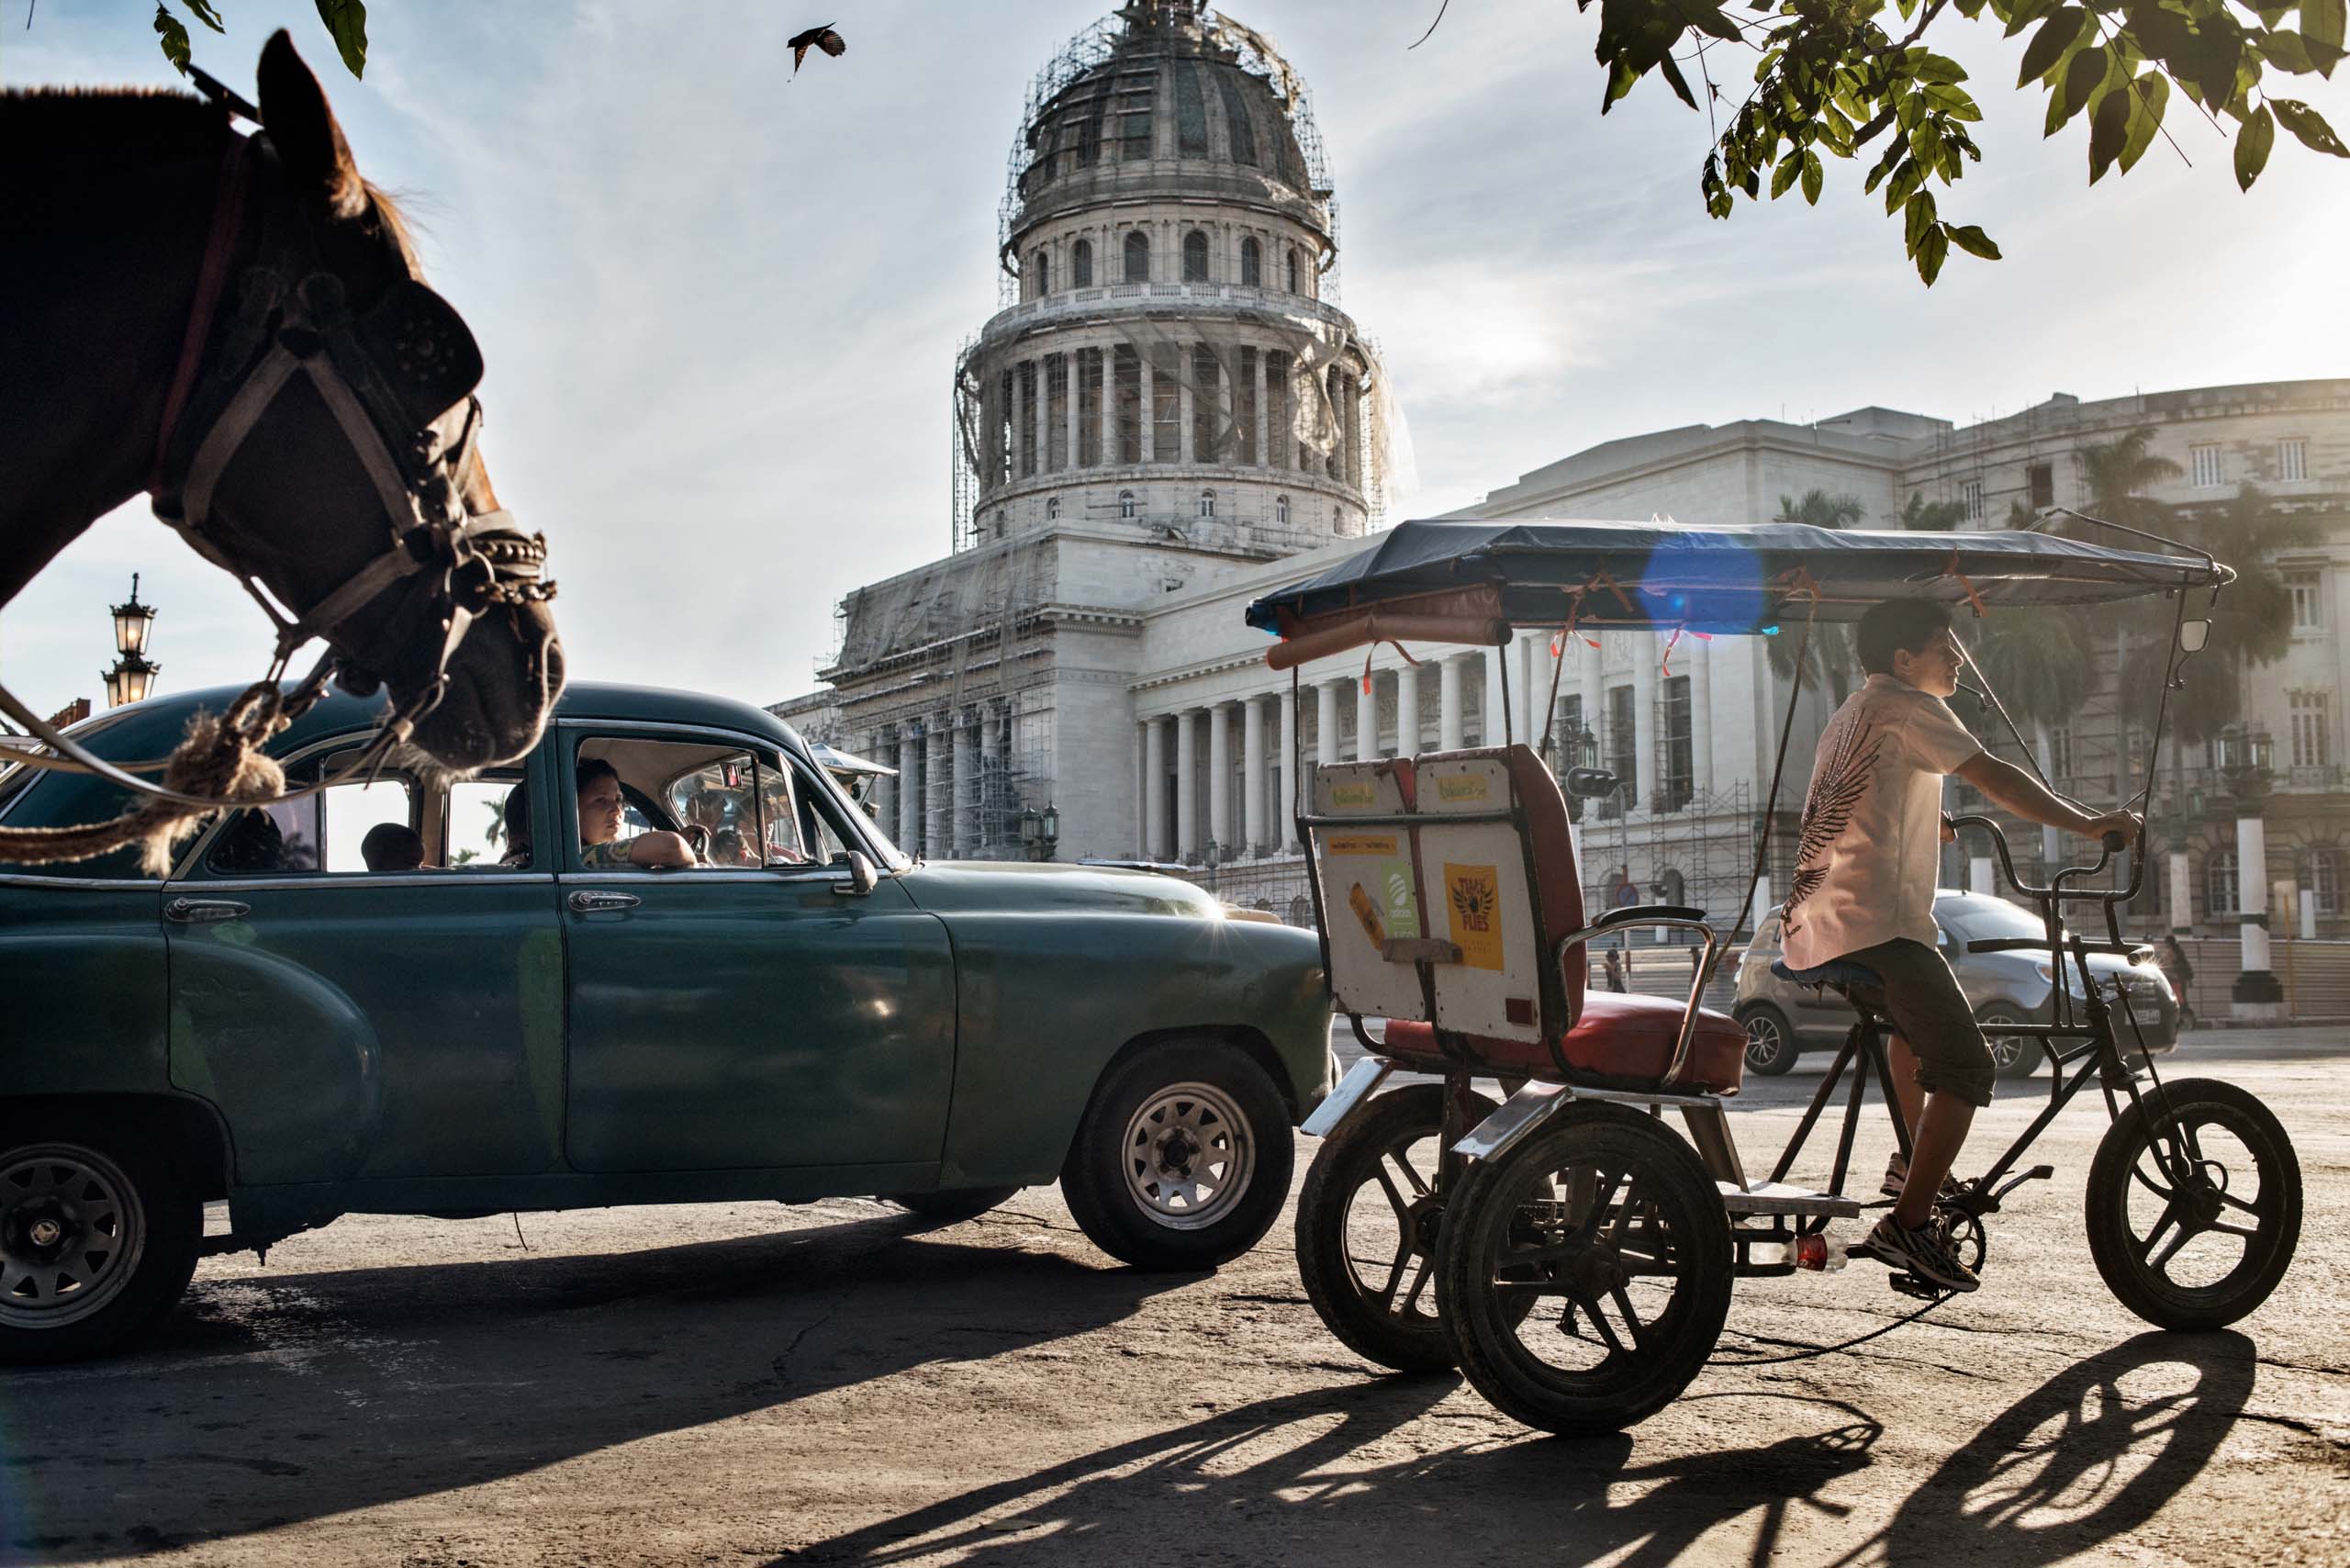 December 2014. The National Cuban Capitol Building in Havana is seen during restoration work.